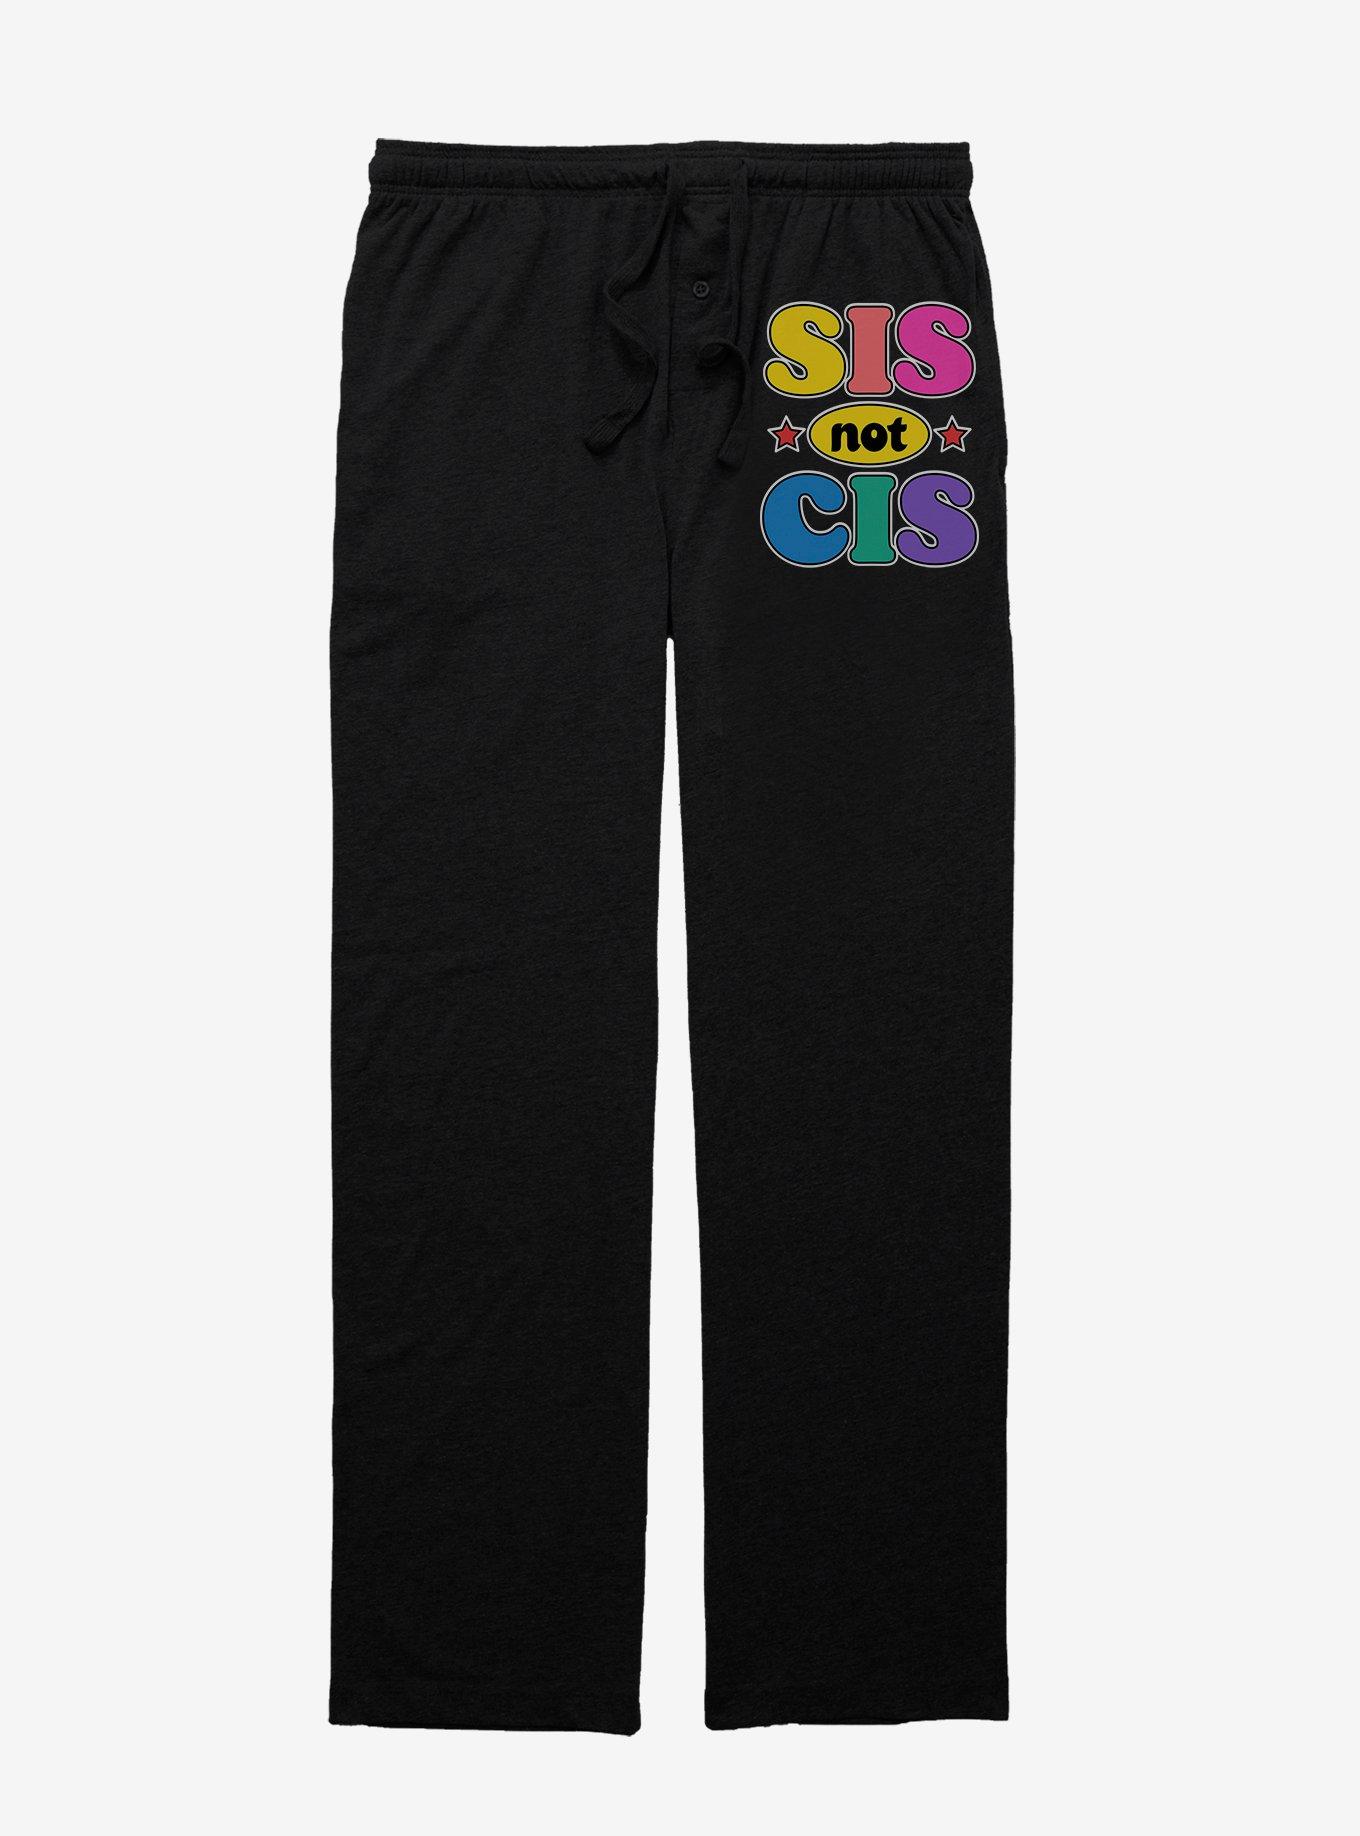 Sis Not Cis Pajama Pants, BLACK, hi-res